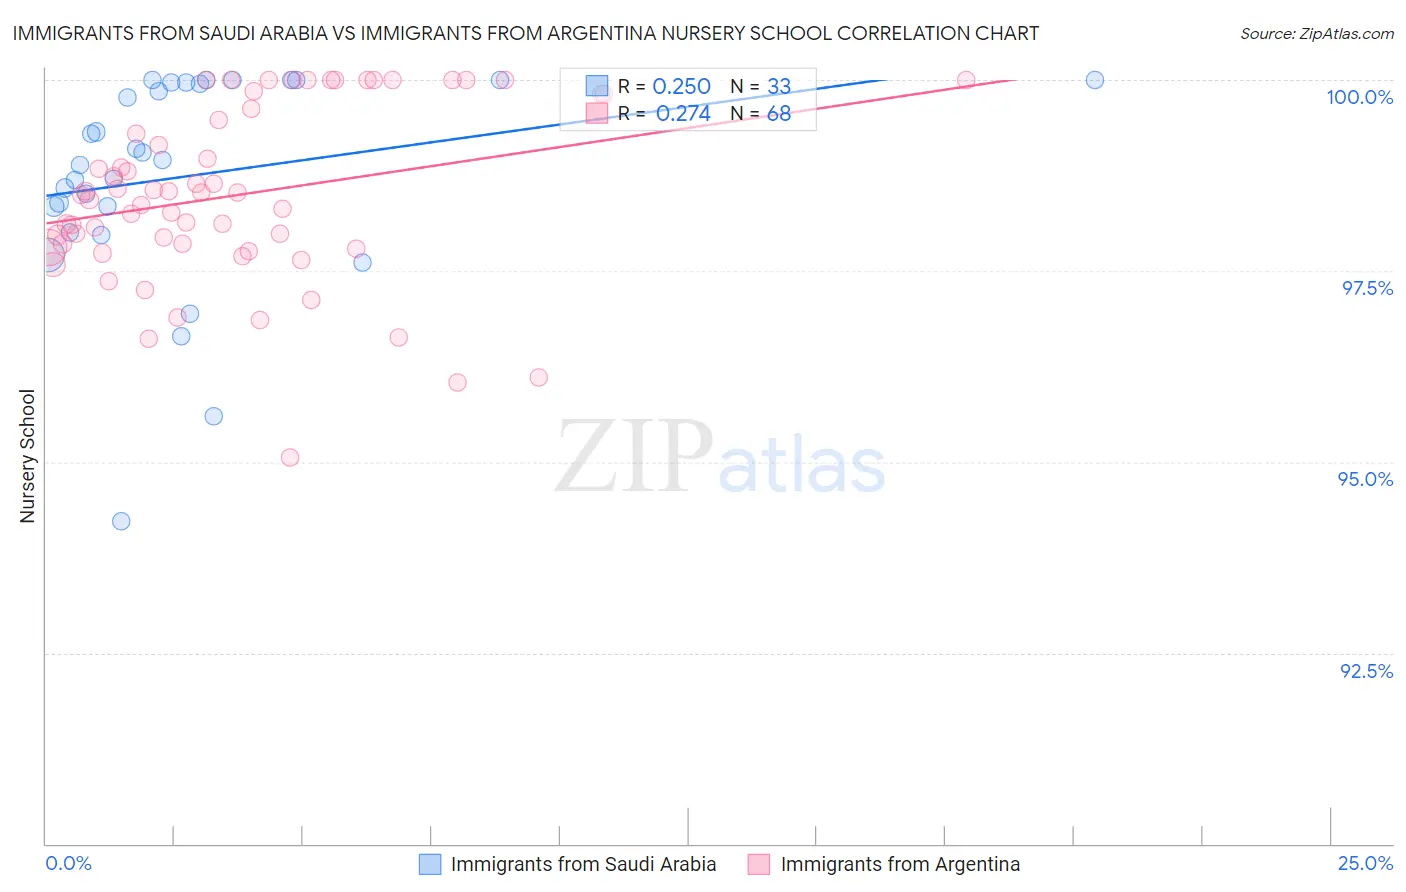 Immigrants from Saudi Arabia vs Immigrants from Argentina Nursery School